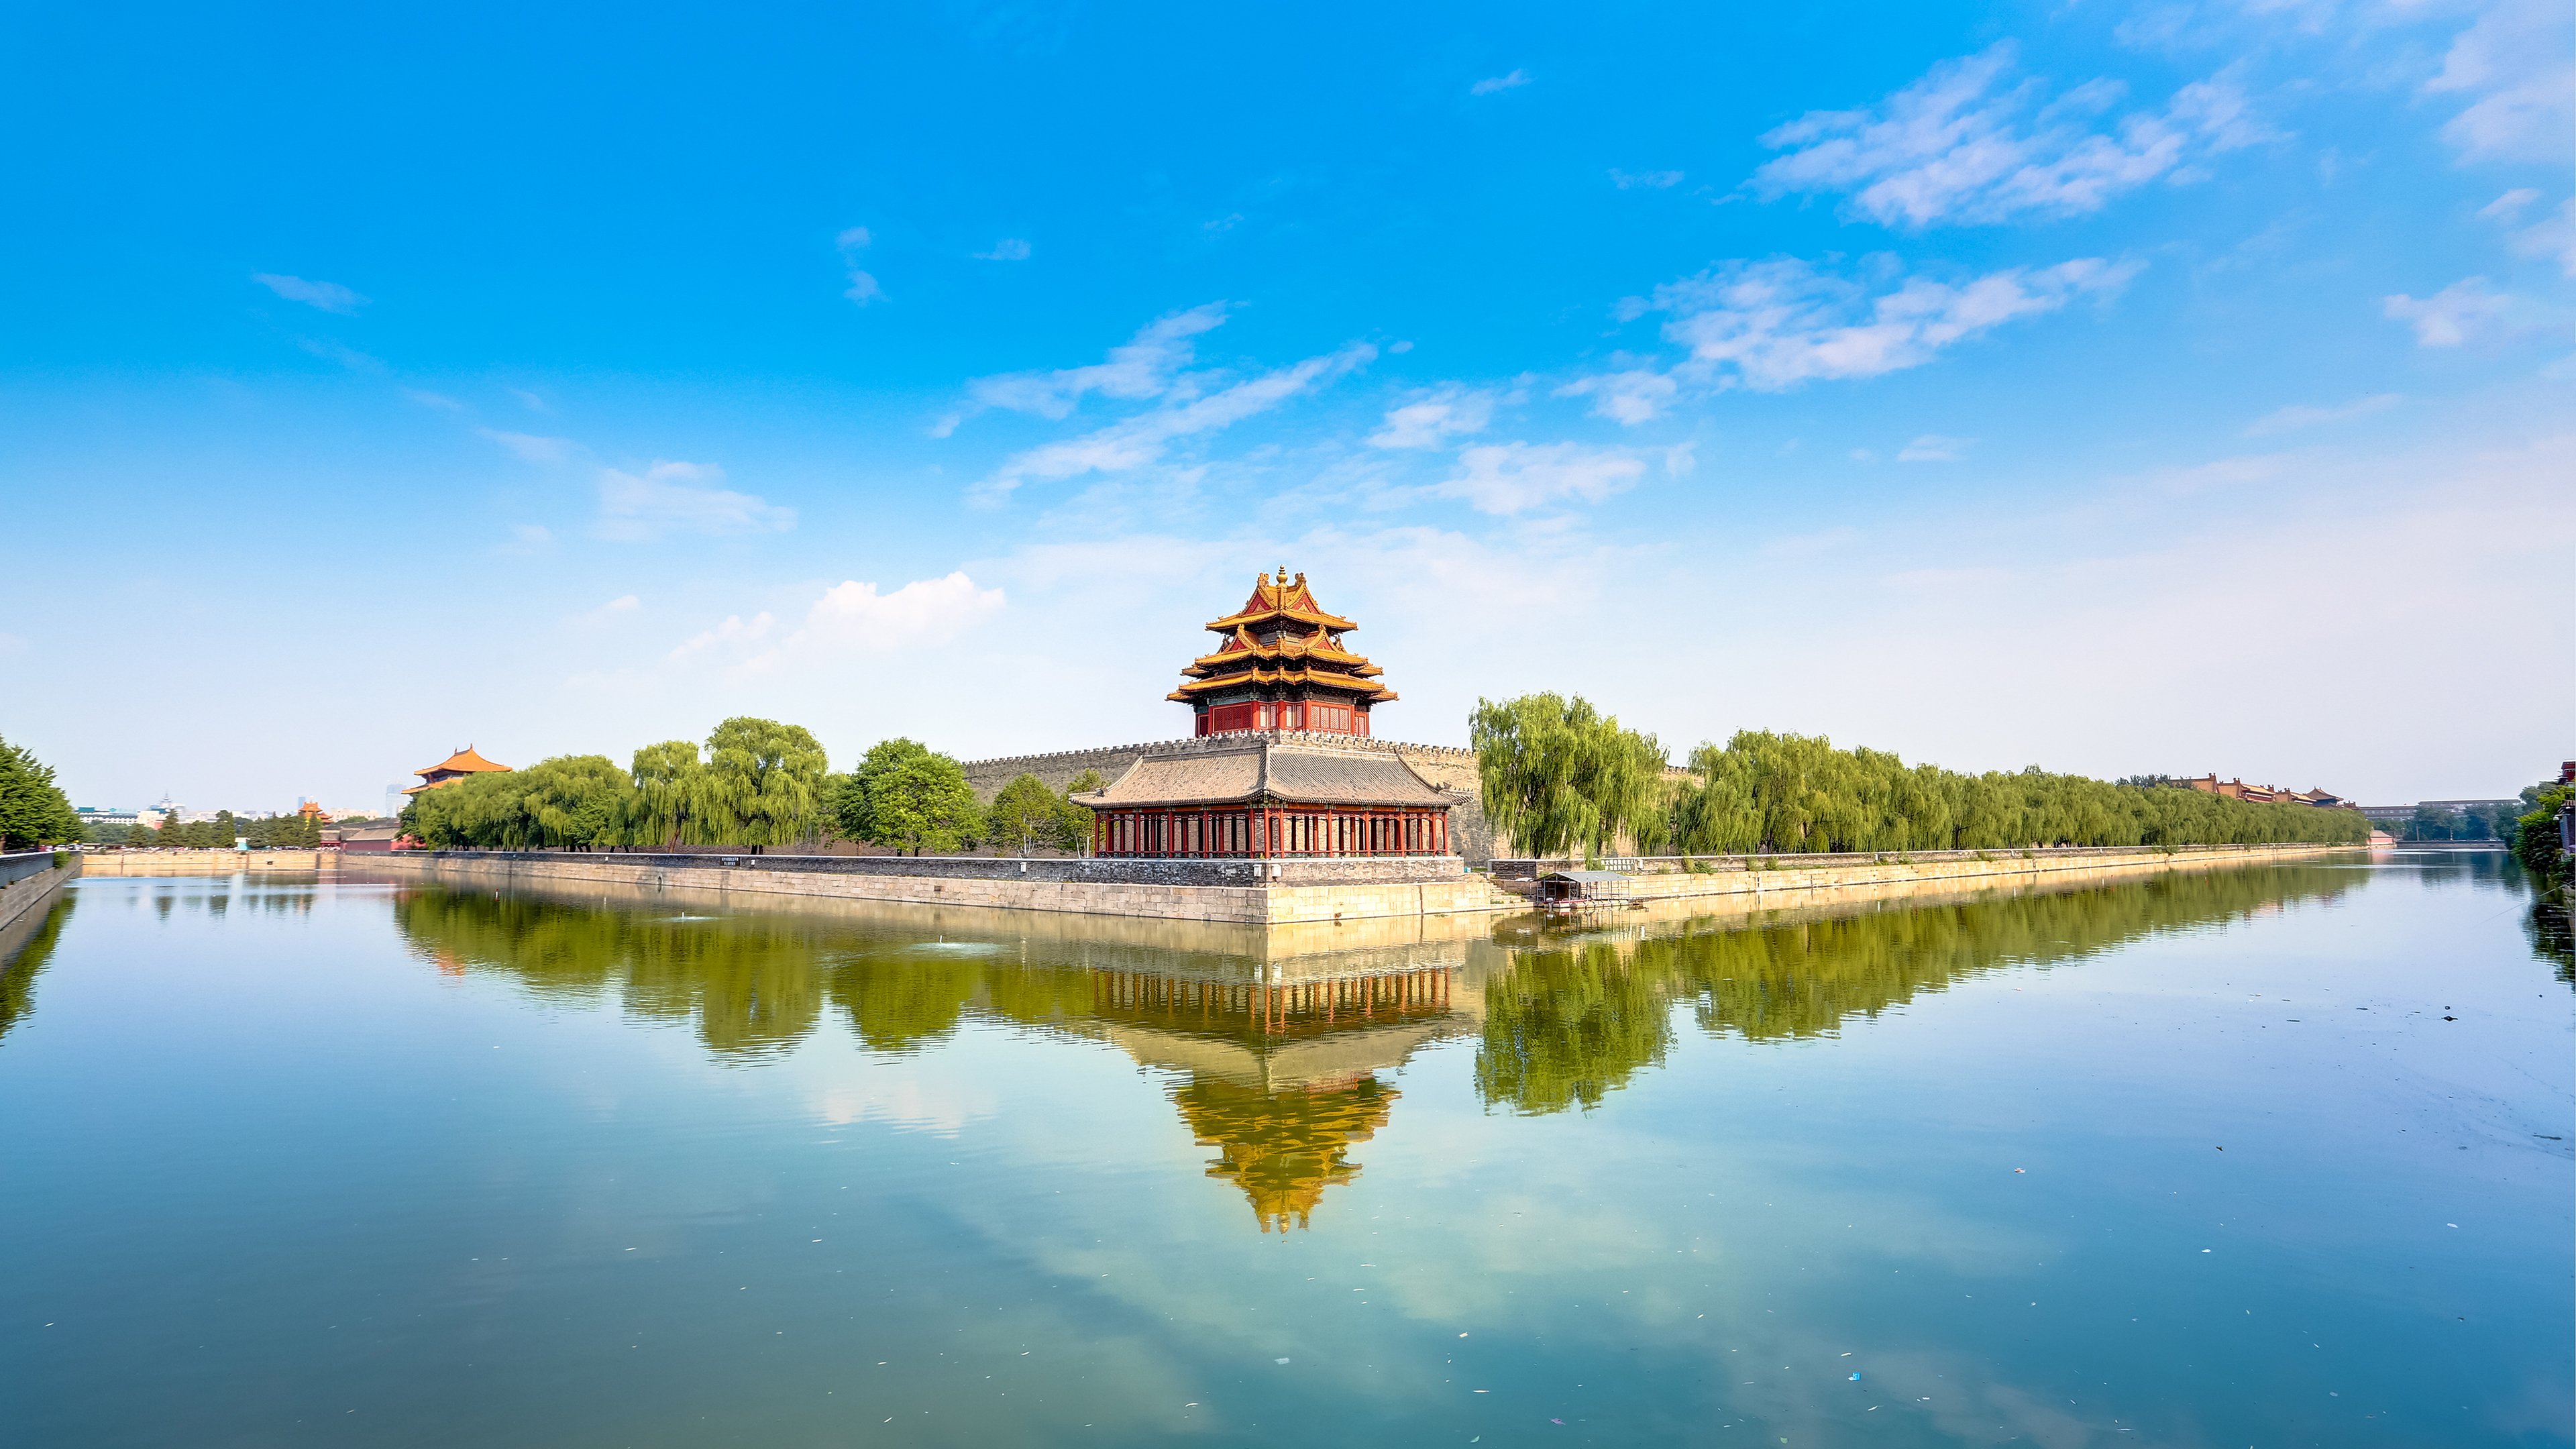 man made, forbidden city, lake, pagoda, palace museum, reflection, tongzi river, monuments